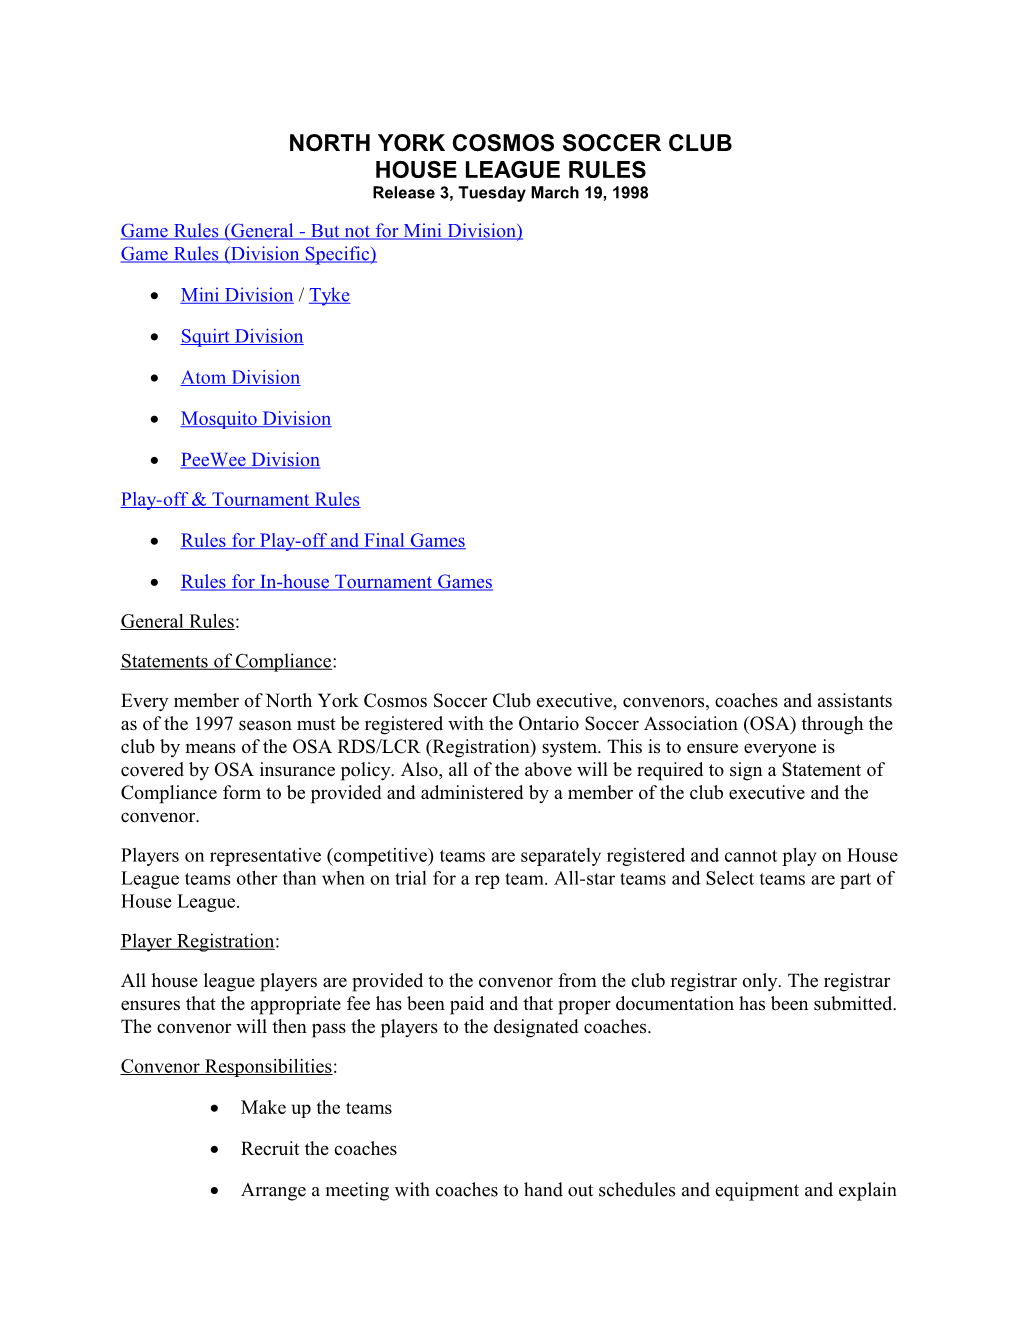 North York Cosmos Soccer Club (House League Rules)